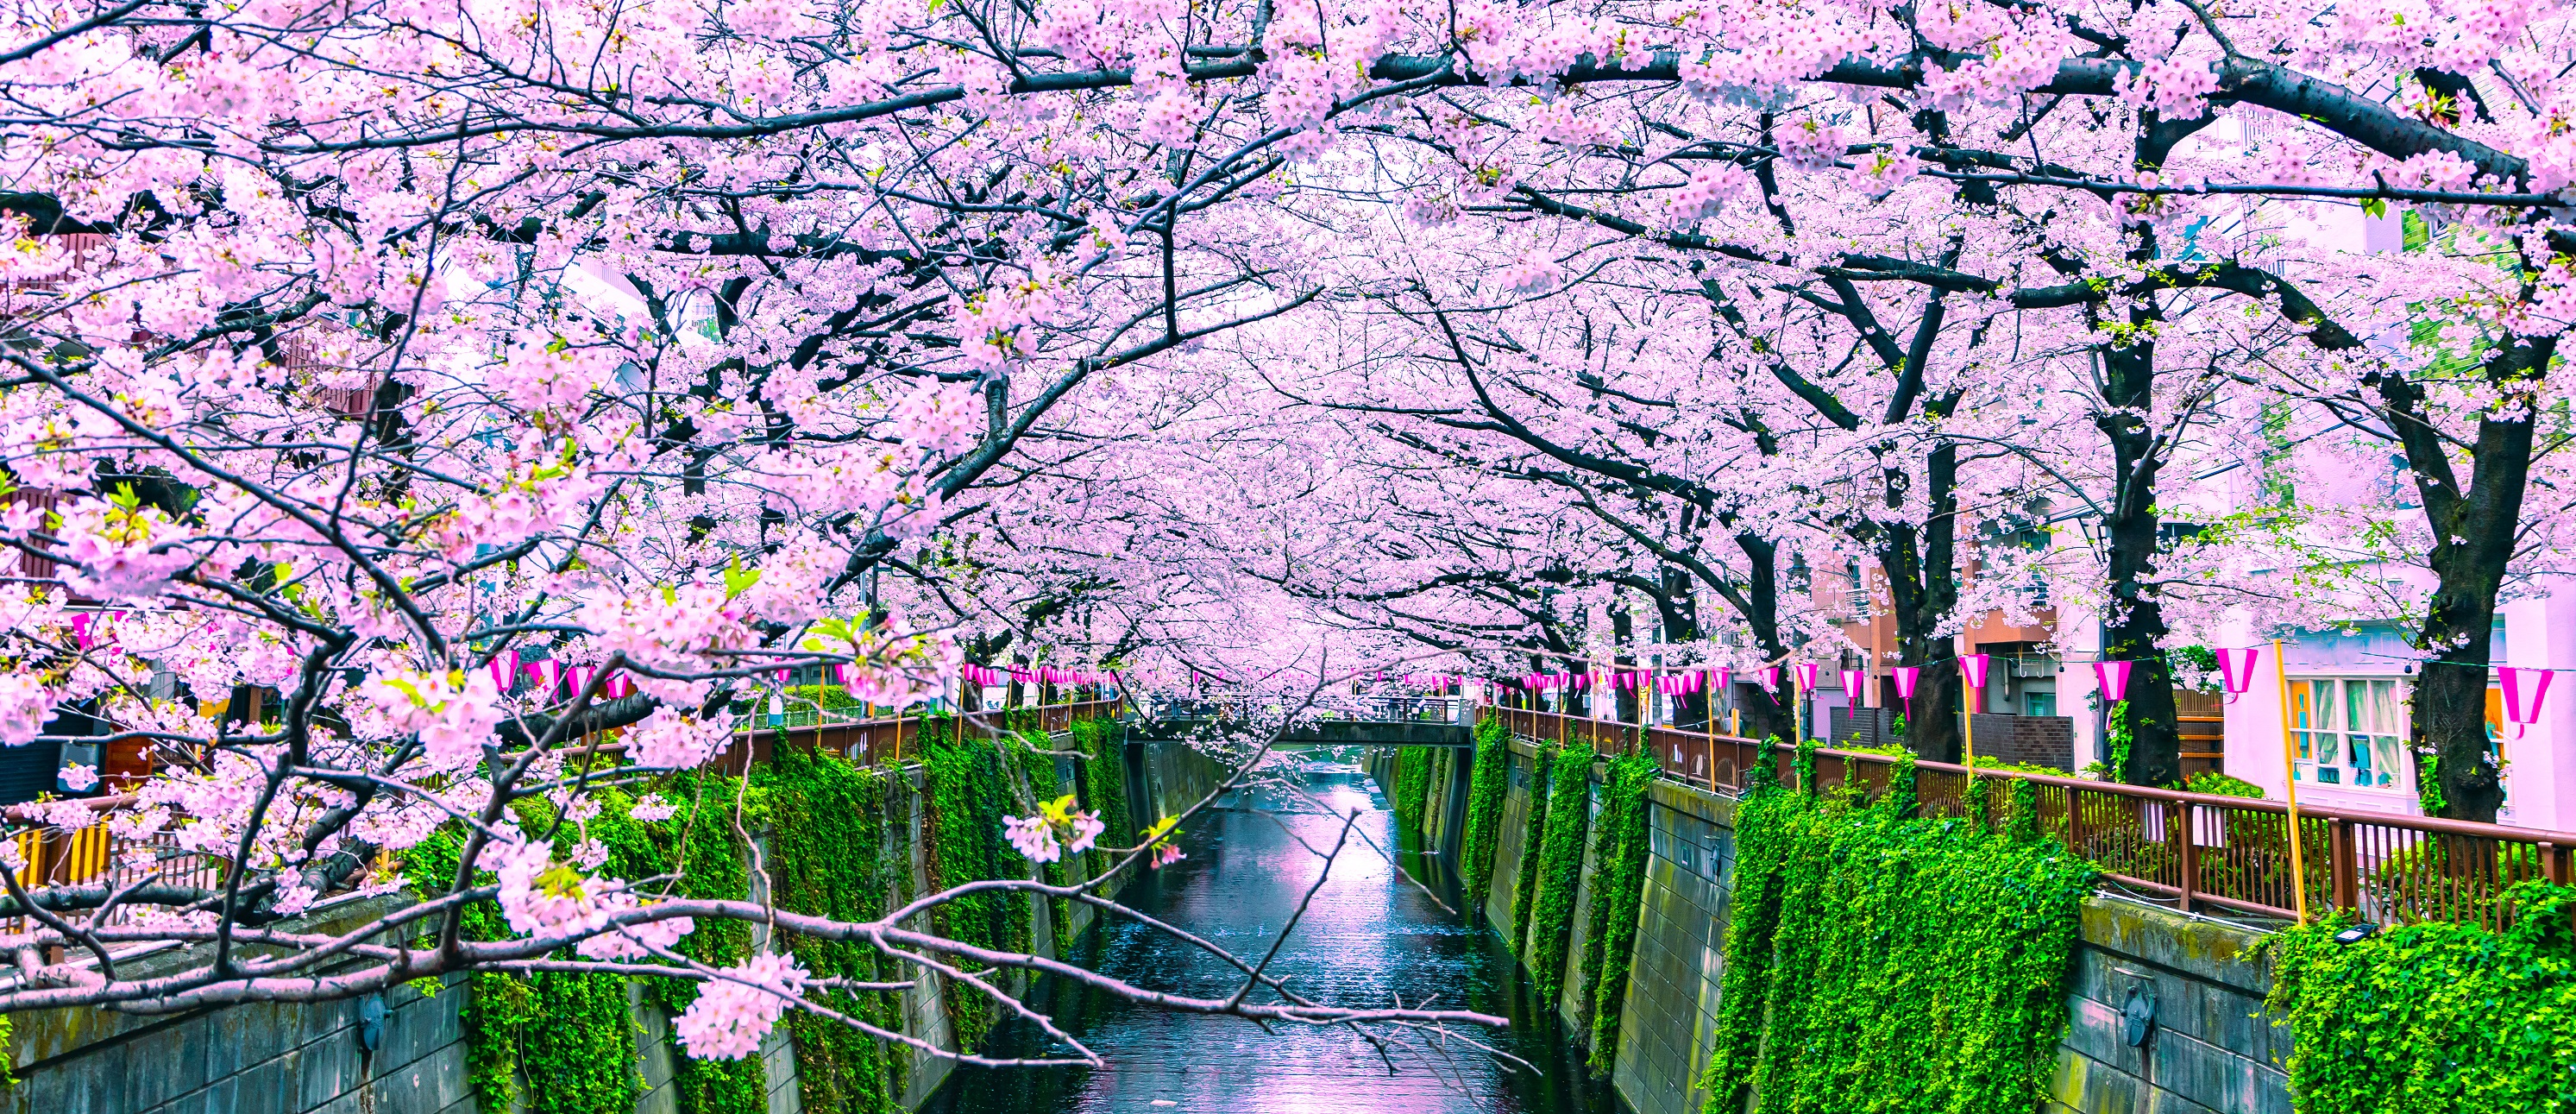 Visiting Japan To View The Sakura In 2020 Japan Rail Pass